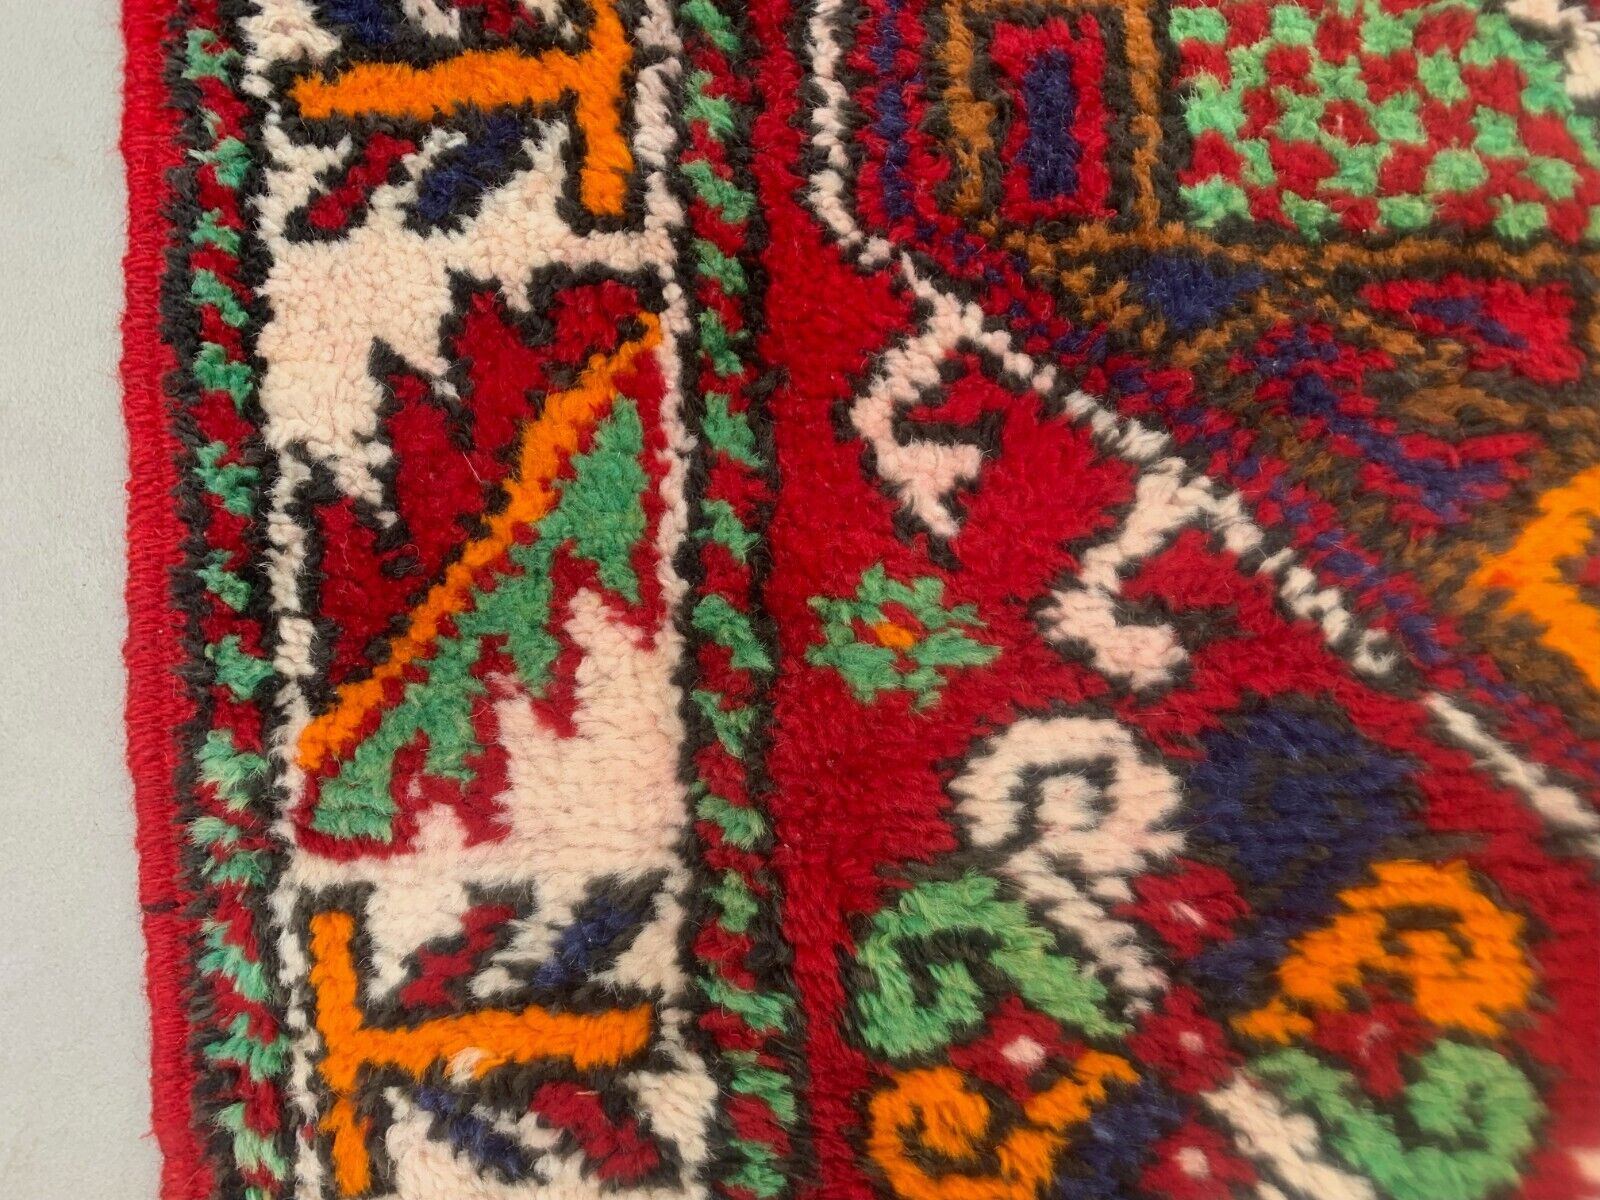 Vintage Western Turkish Rug Oriental 120x80 cm Tribal Small Carpet, Red